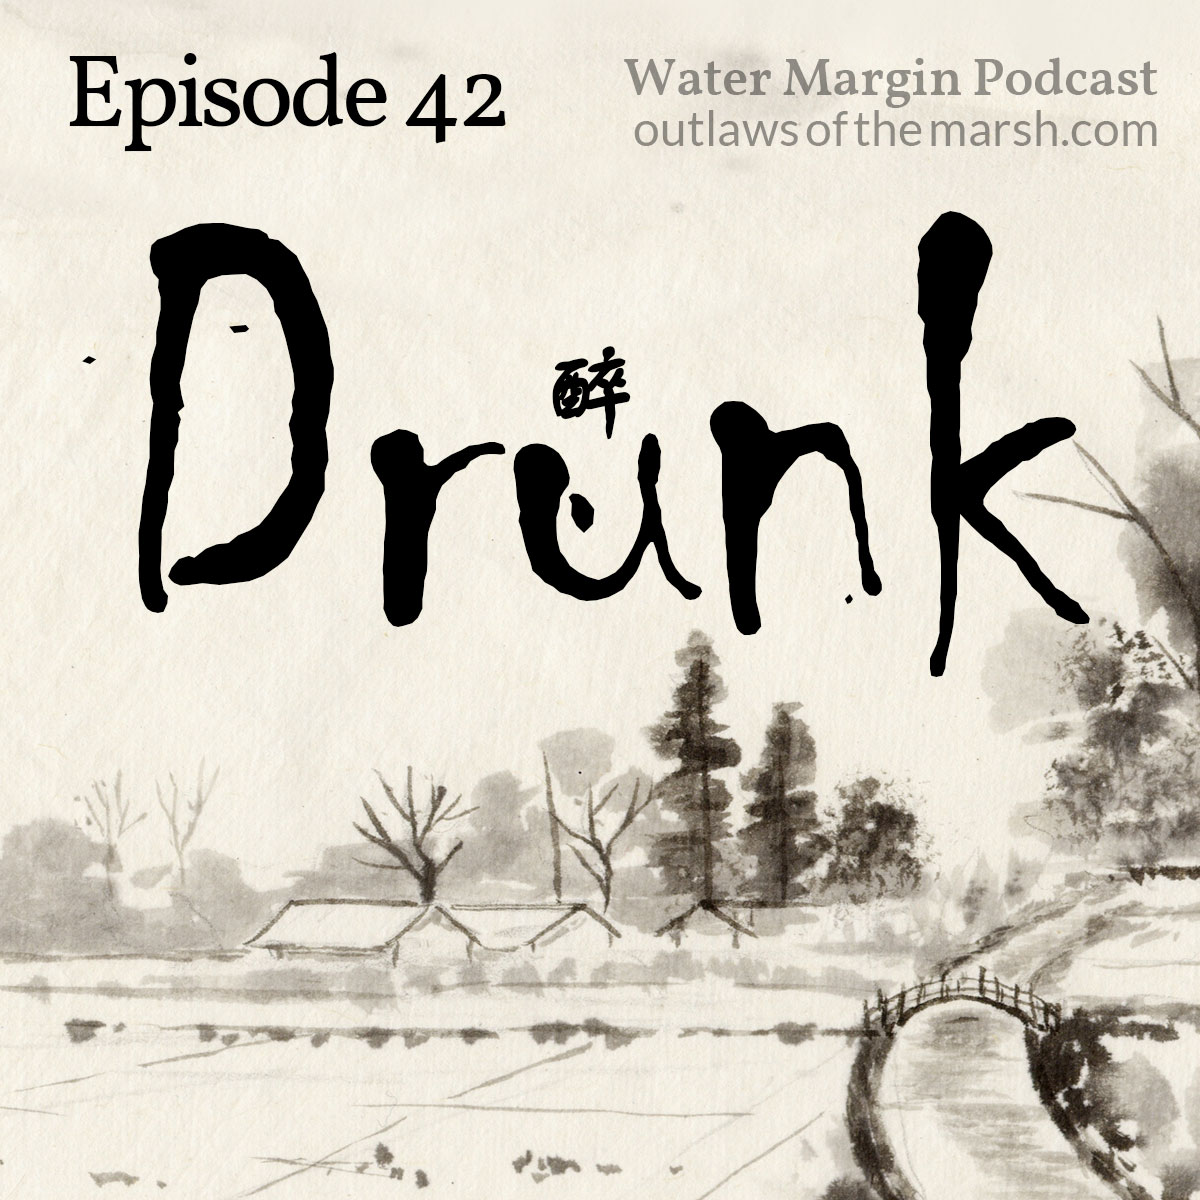 Water Margin Podcast: Episode 042